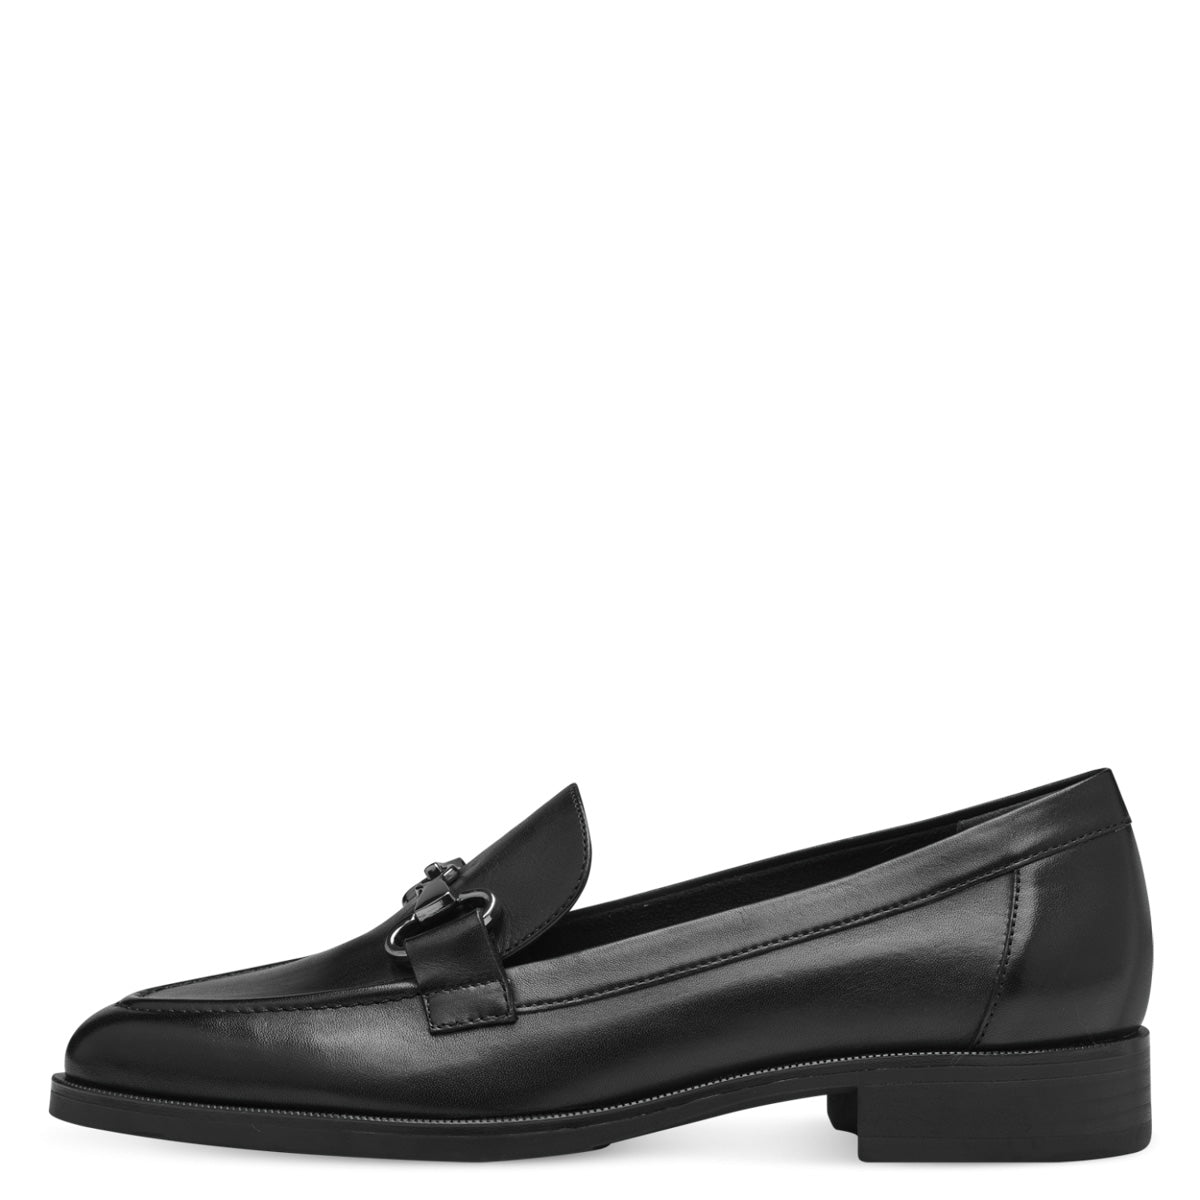 Tamaris Elegant Black Loafer with Chain Detail and Block Heel